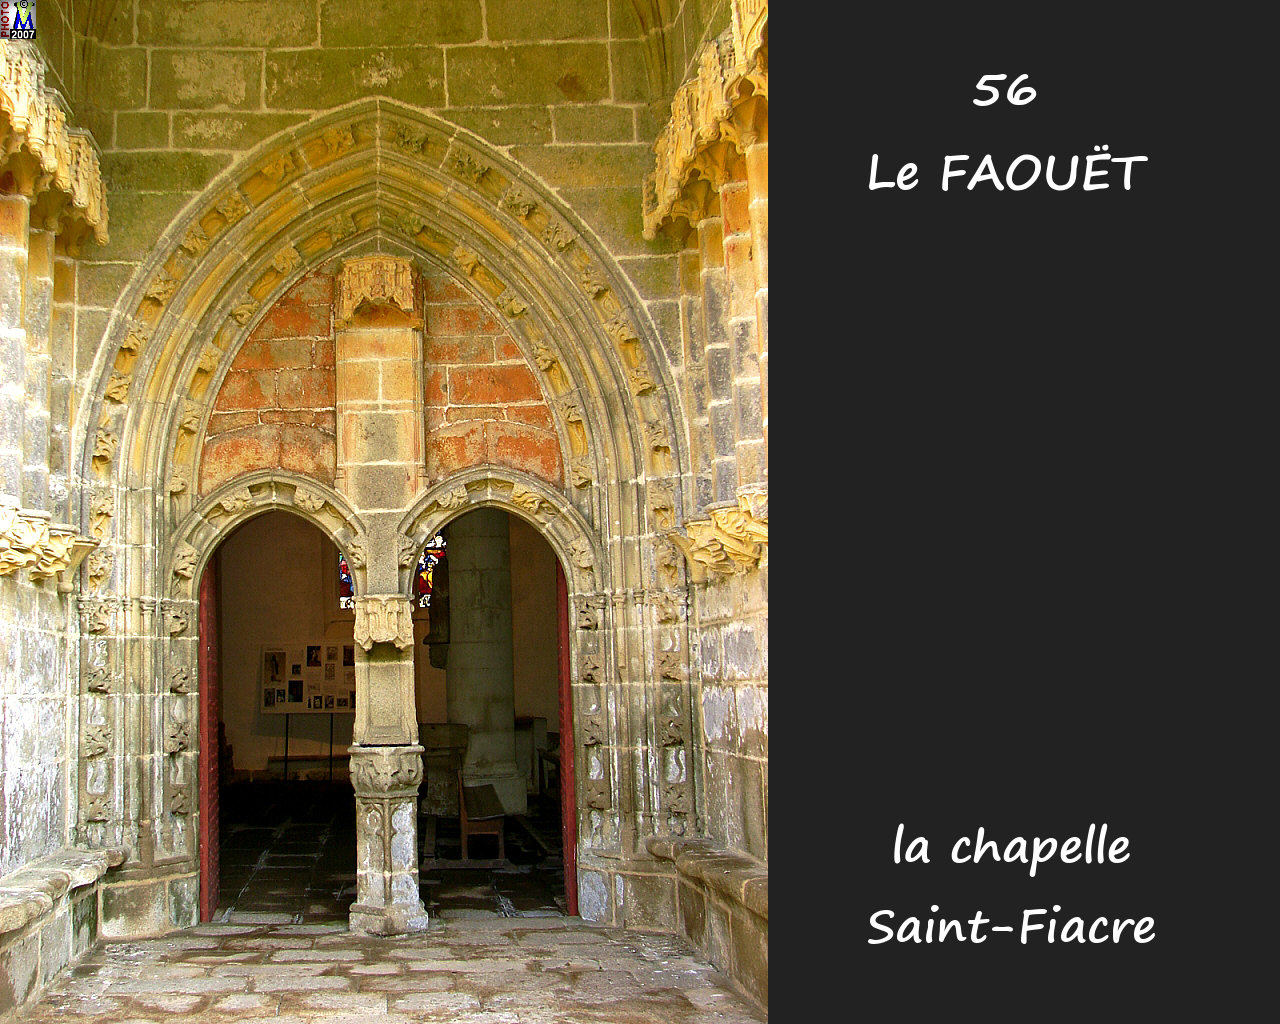 56FAOUET_chapelle-fiacre_122.jpg